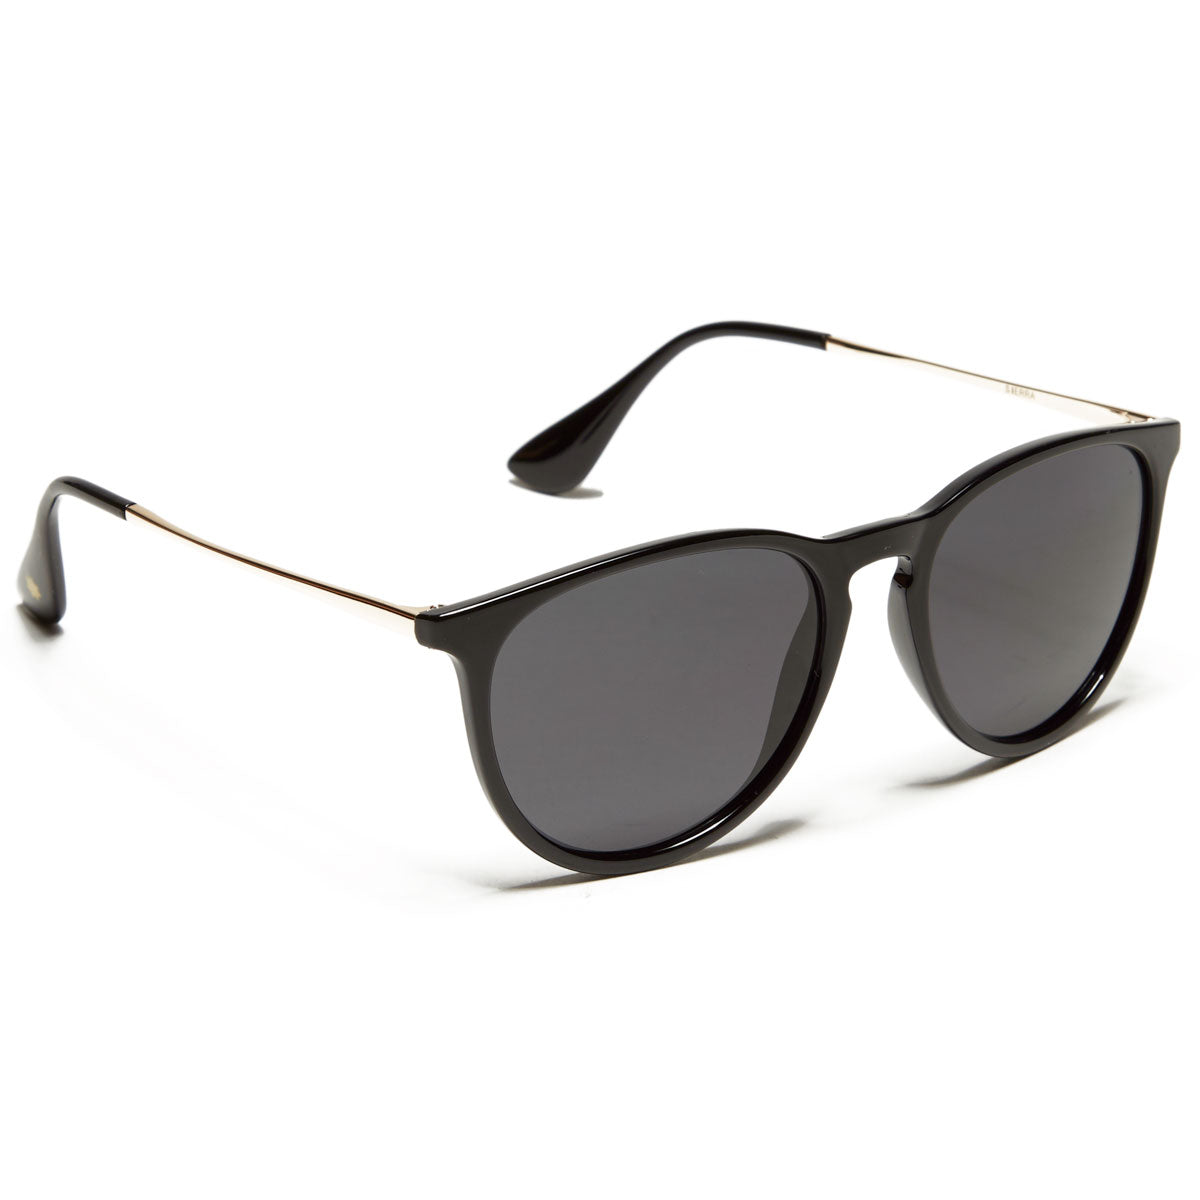 Glassy Sierra Polarized Sunglasses - Black/Gold image 1